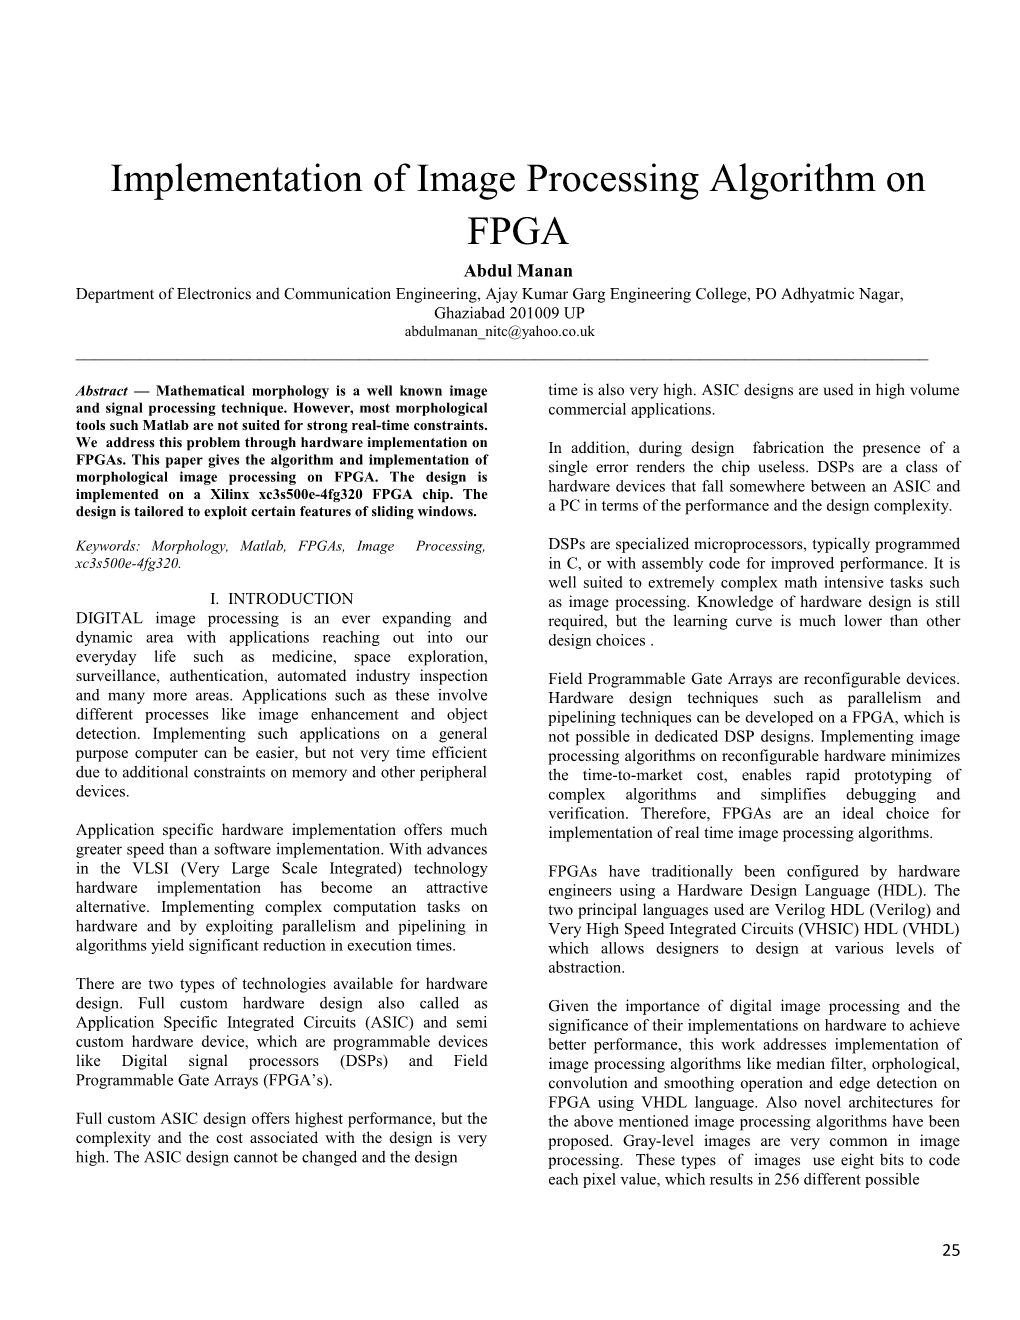 Implementation of Image Processing Algorithm on FPGA